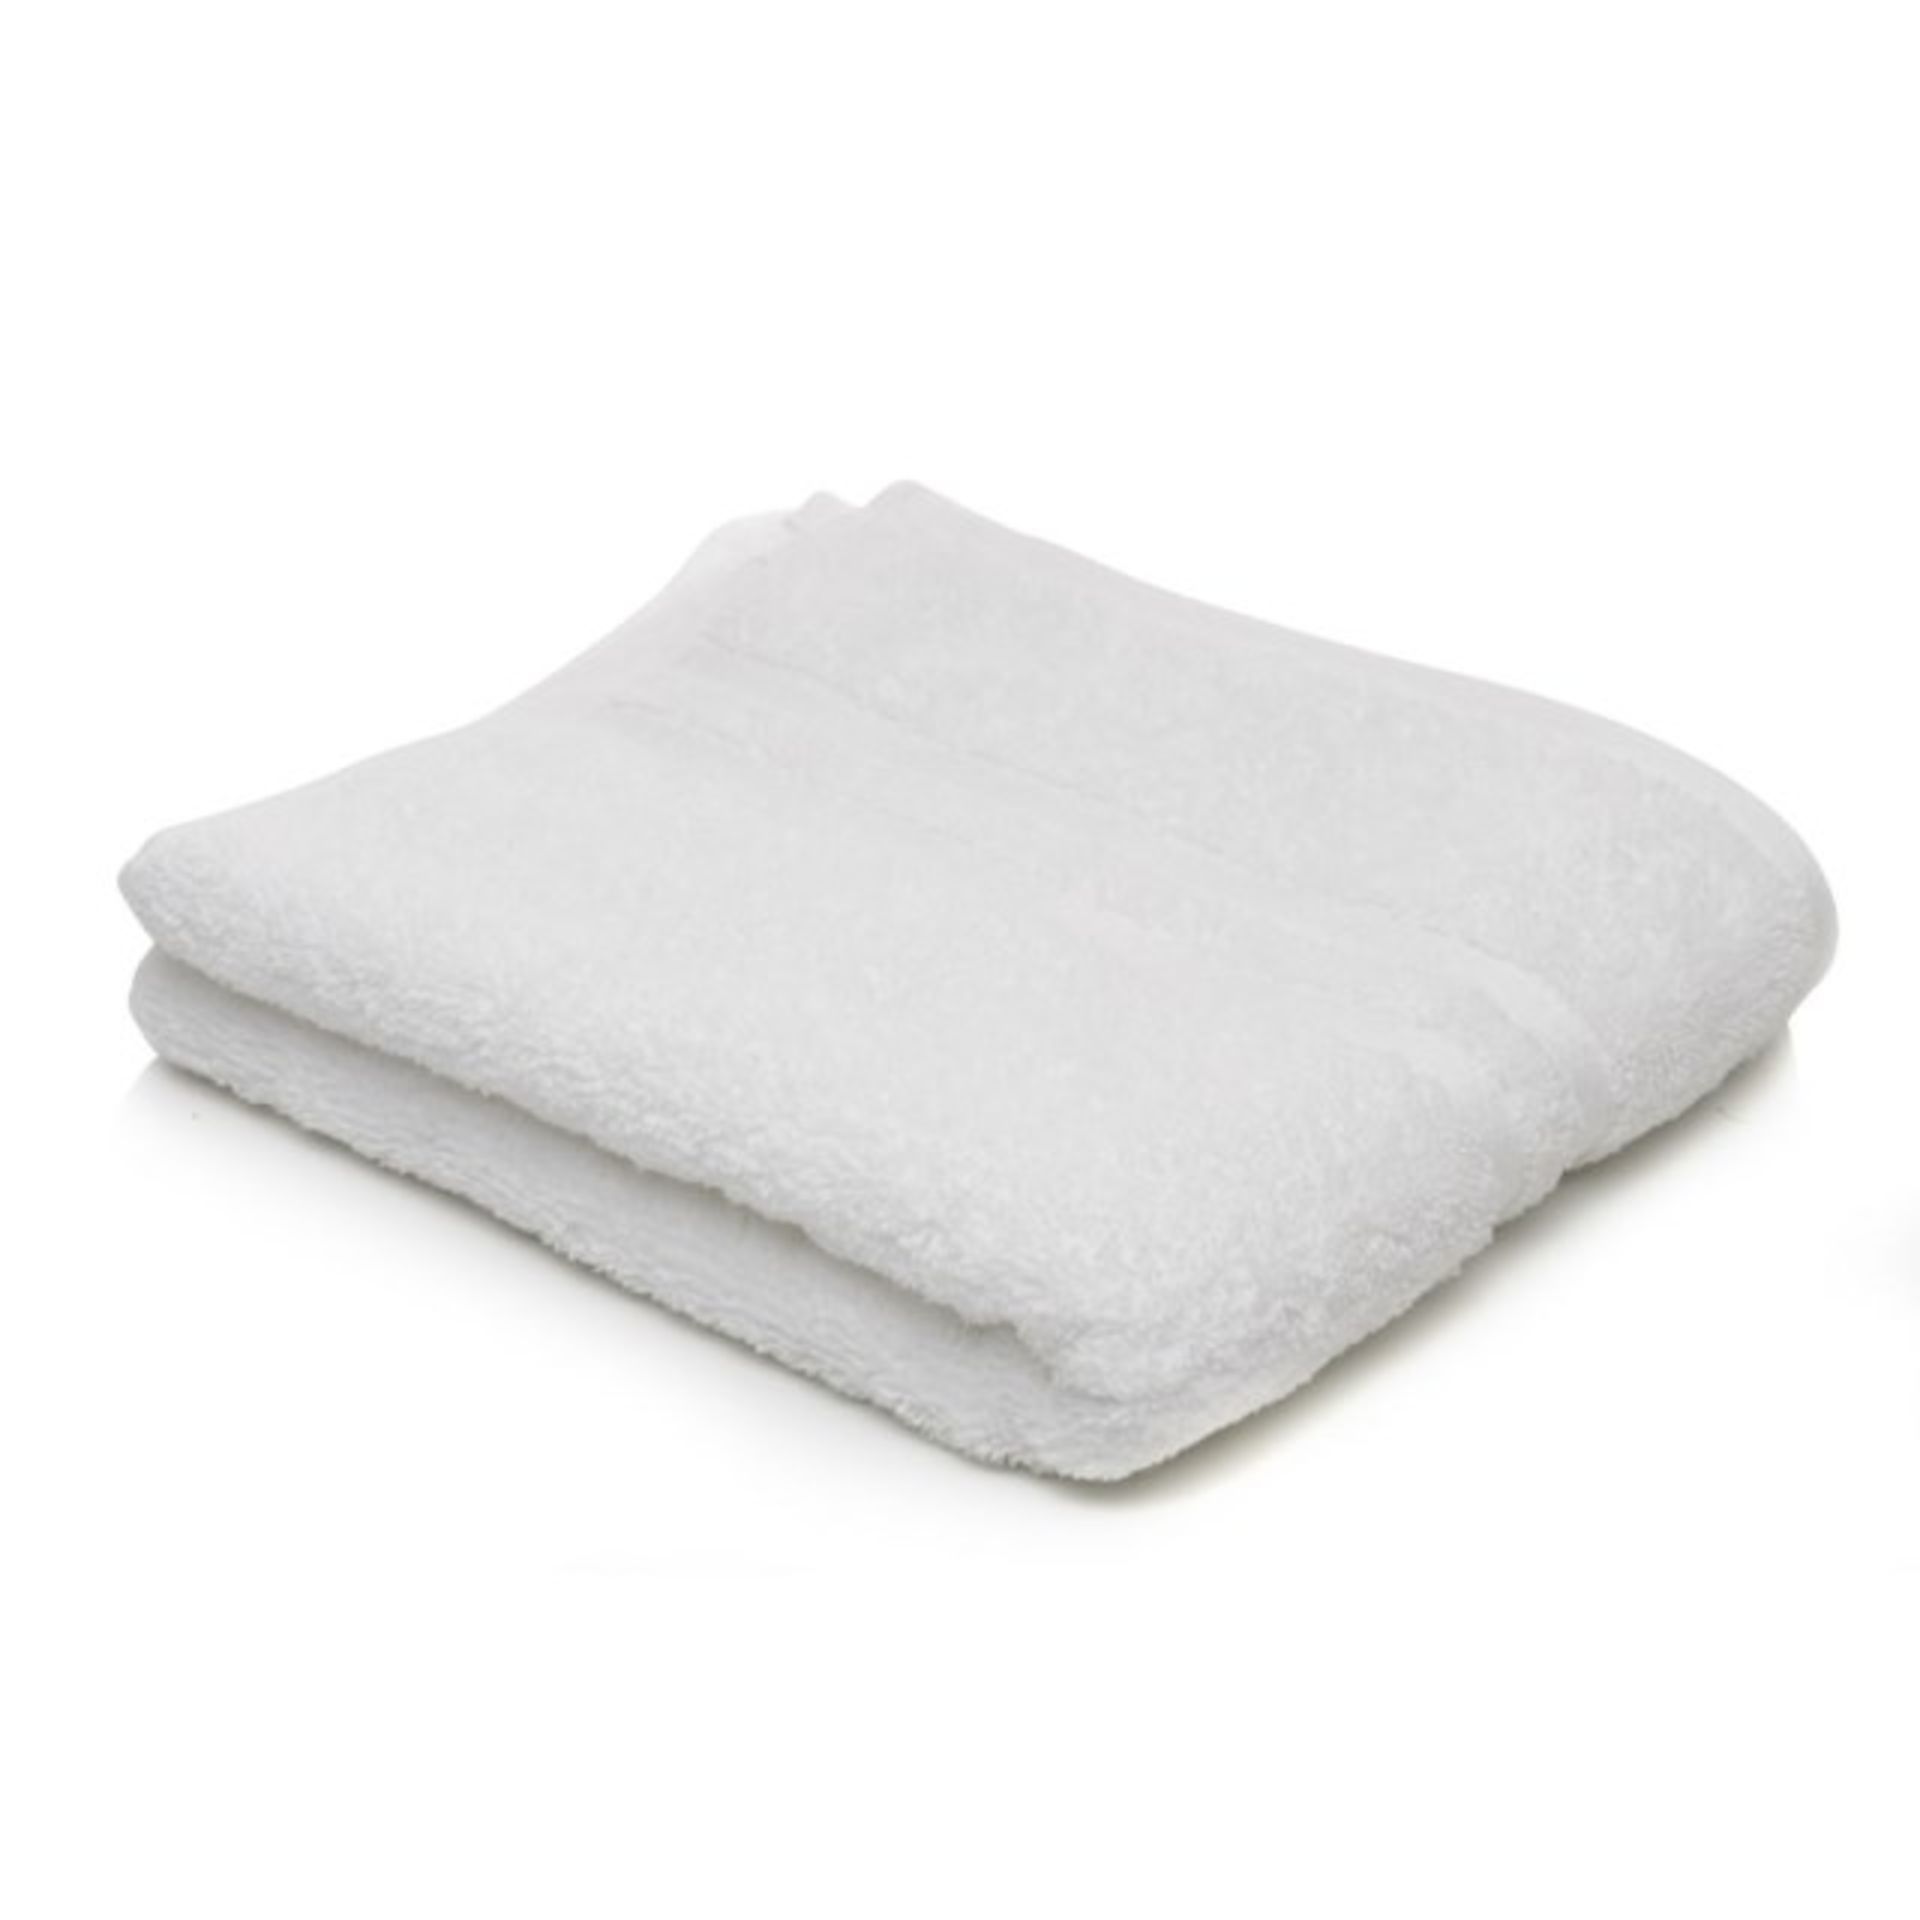 V *TRADE QTY* Brand New Hotel Quality Cotton Bath Towel 70 x 140cm RRP £19.99 X 6 Bid price to be